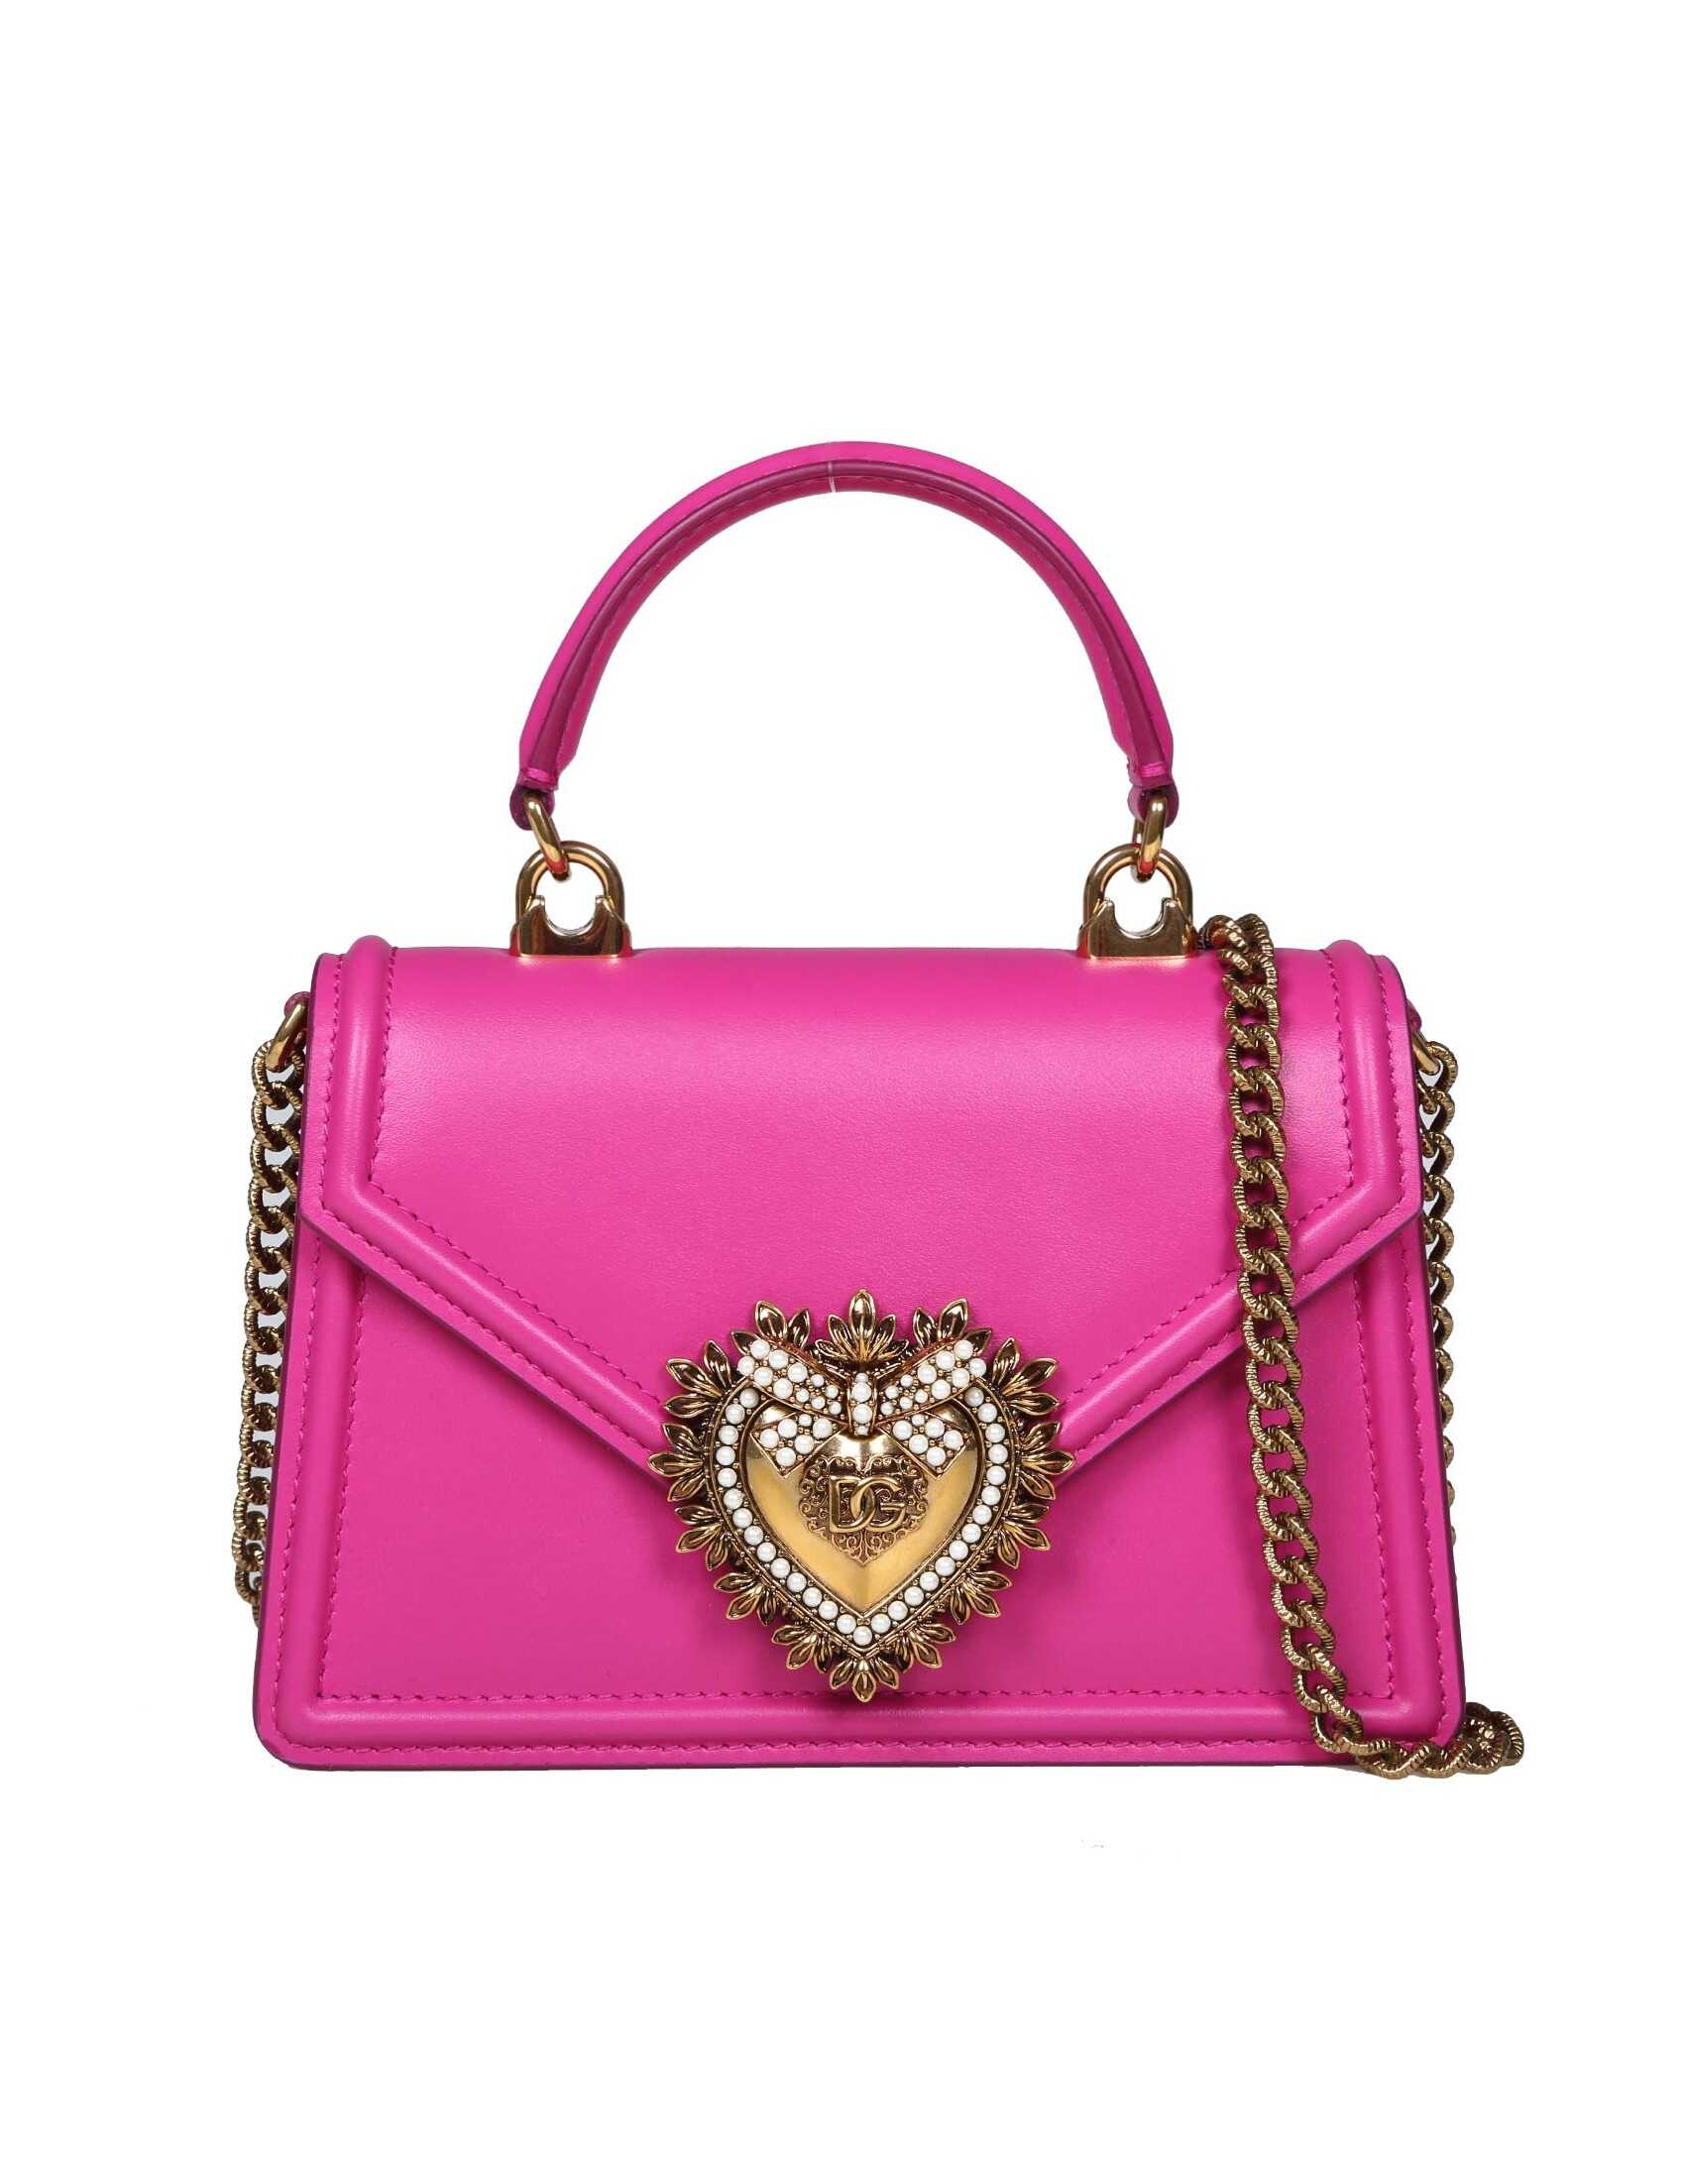 Dolce & Gabbana Dolce & gabbana small devotion handbag in shocking pink leather Pink